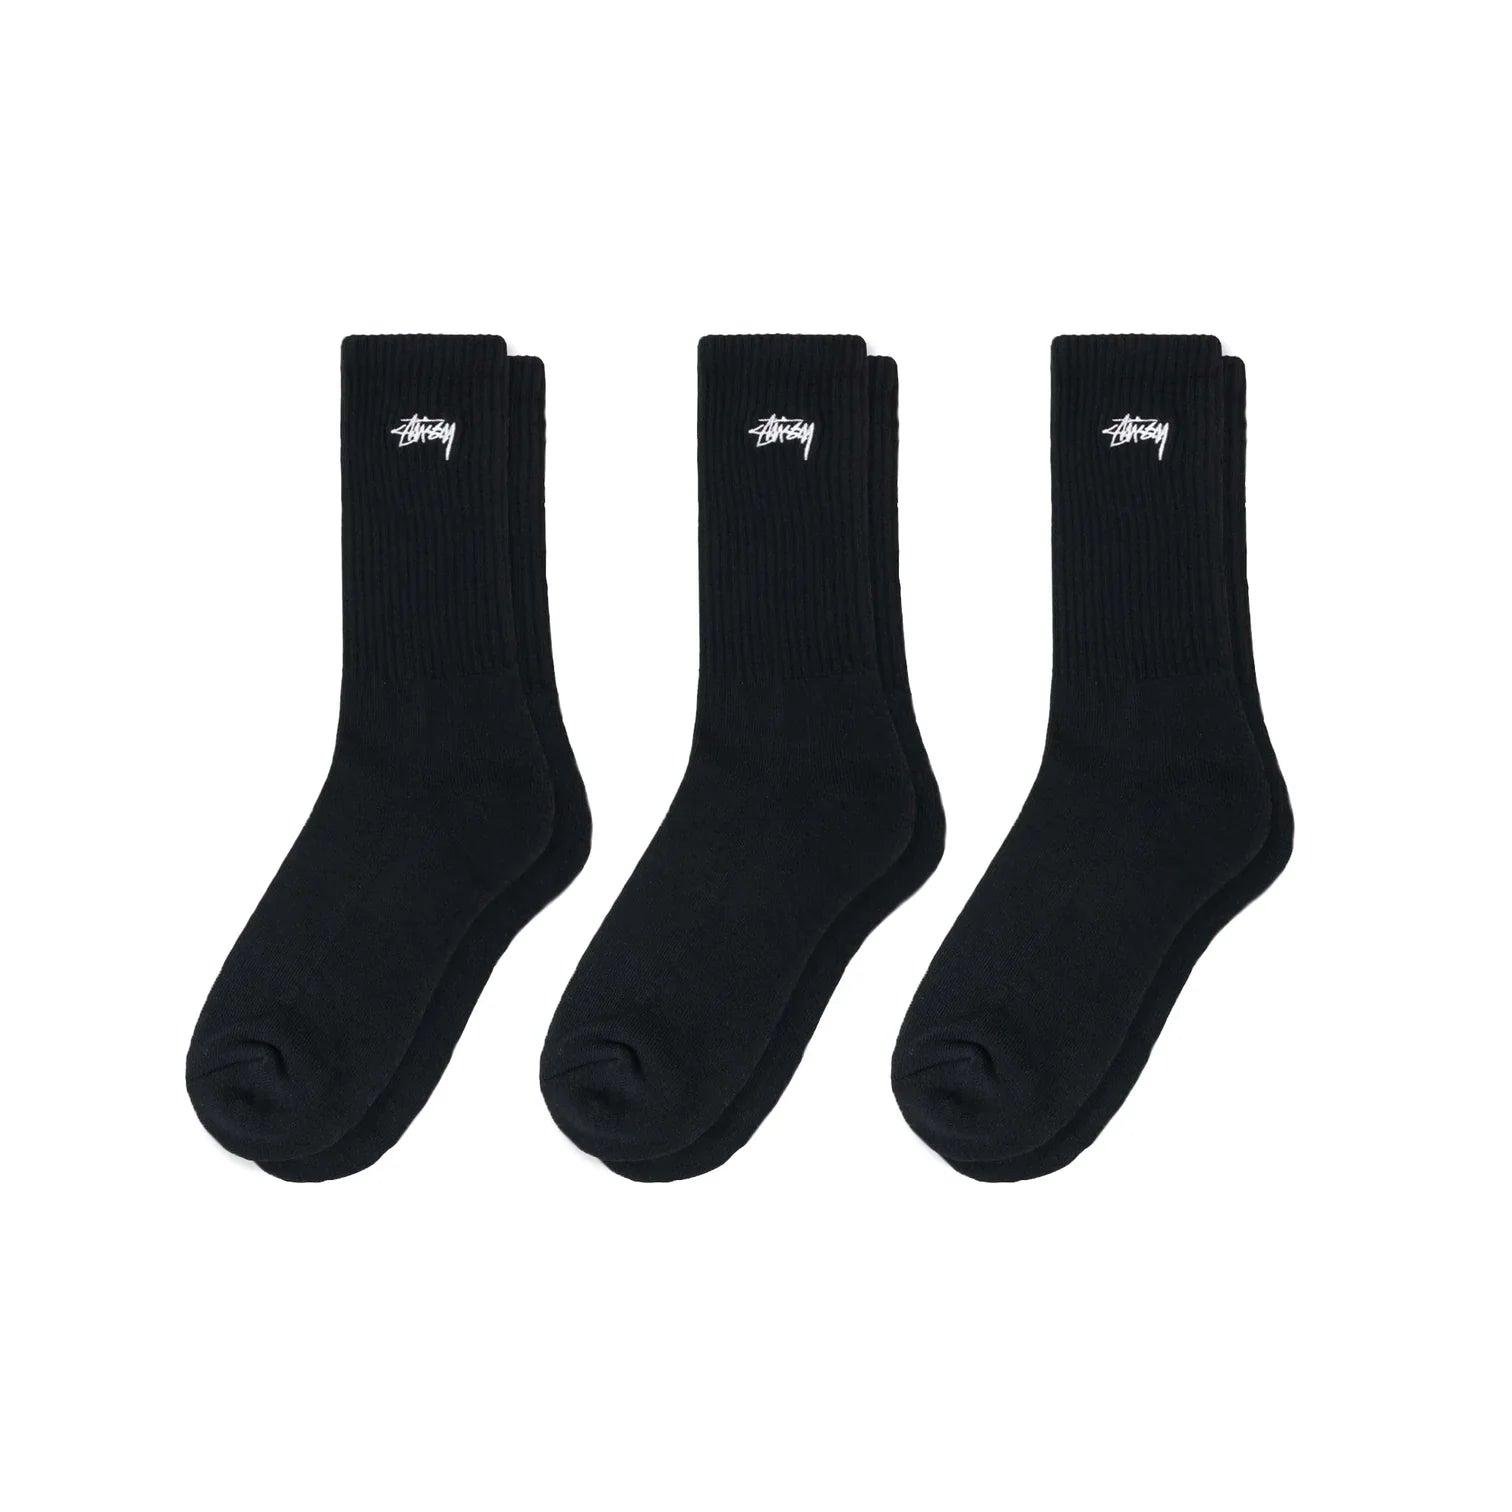 STÜSSY - Stock Crew Sock Pack - (Black) by STUSSY